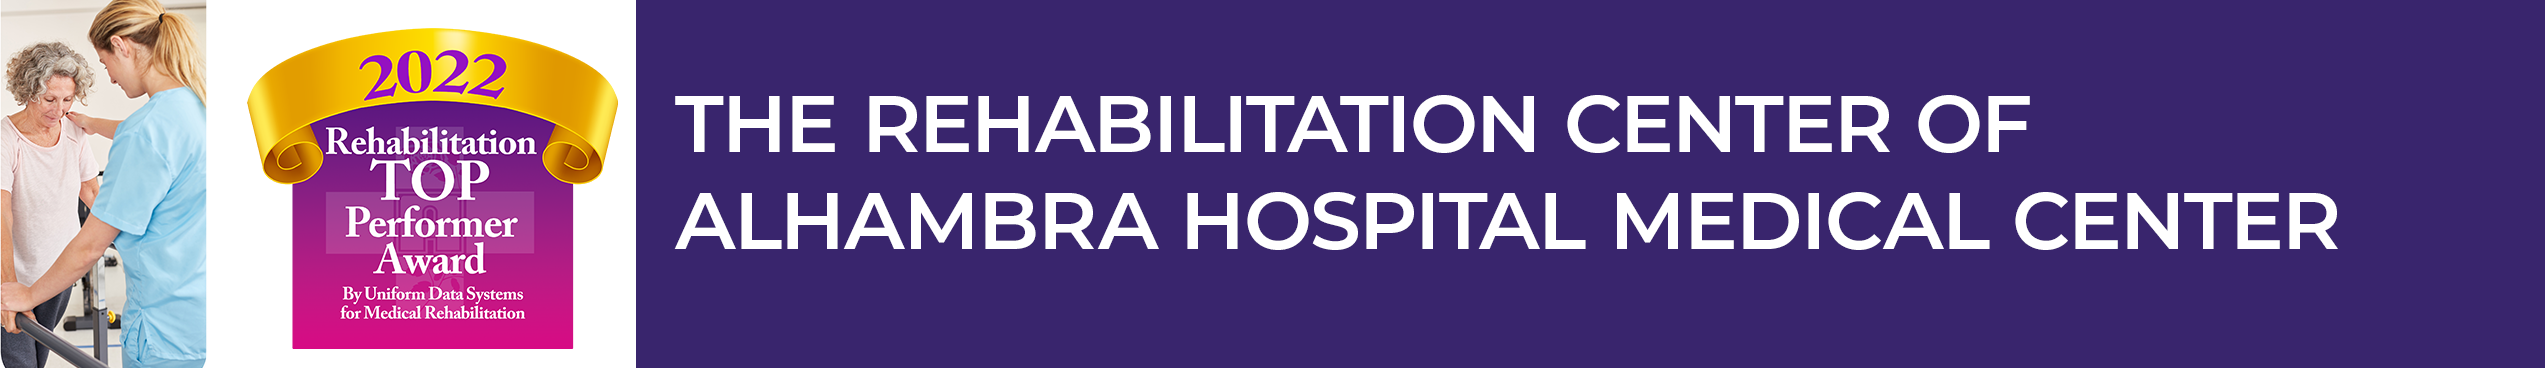 The Rehabilitation Center of Alhambra Hospital Medical Center